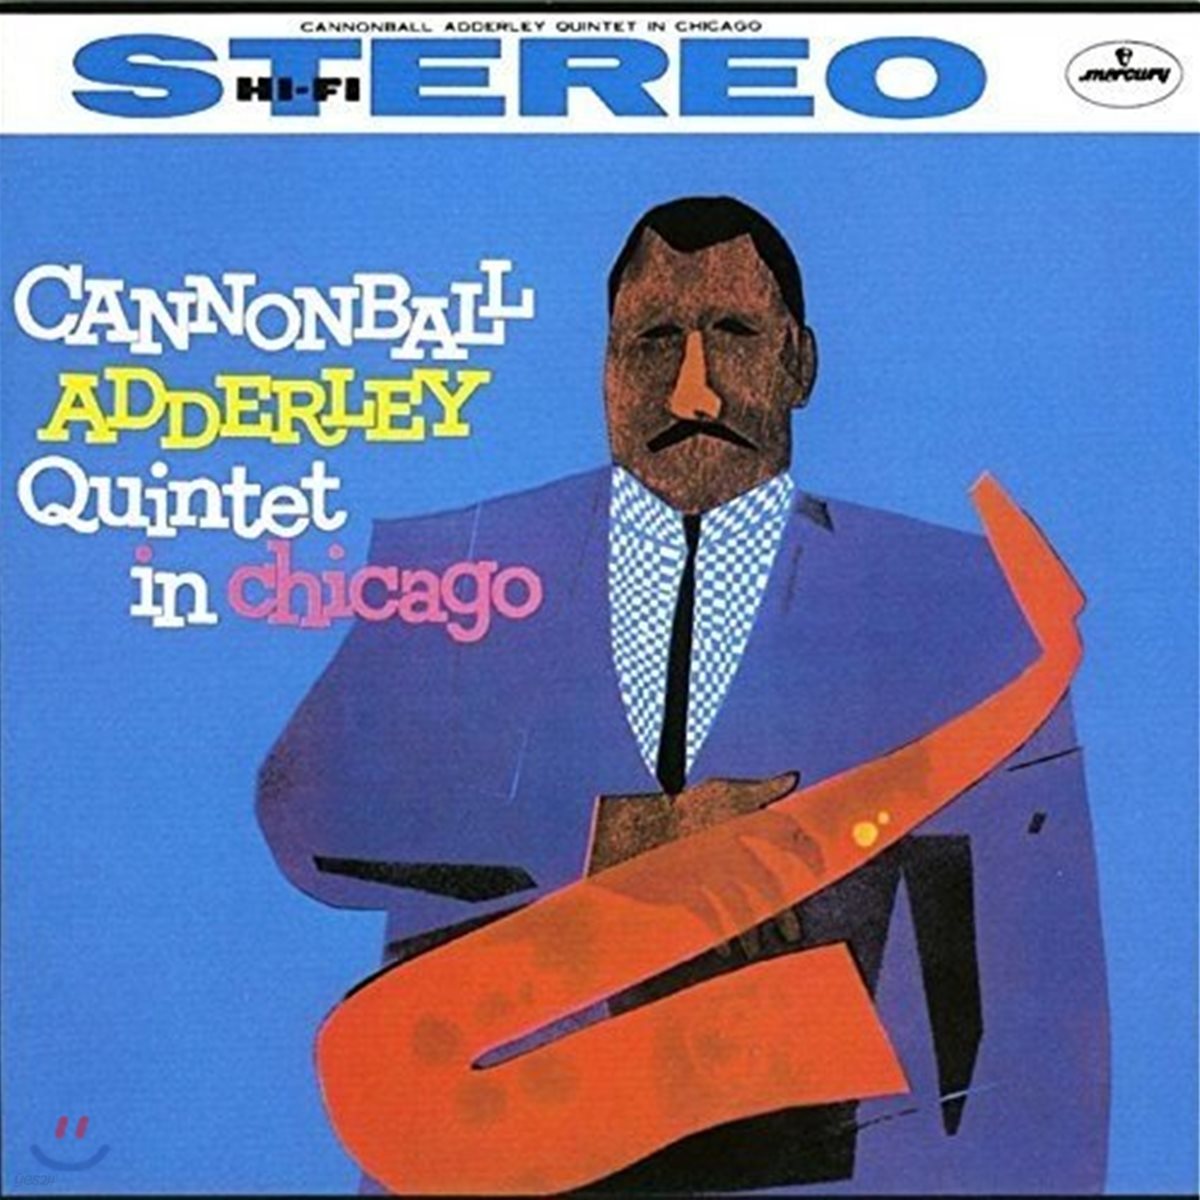 Cannonball Adderley - Quintet In Chicago (캐넌볼 애덜리 퀸텟 인 시카고)